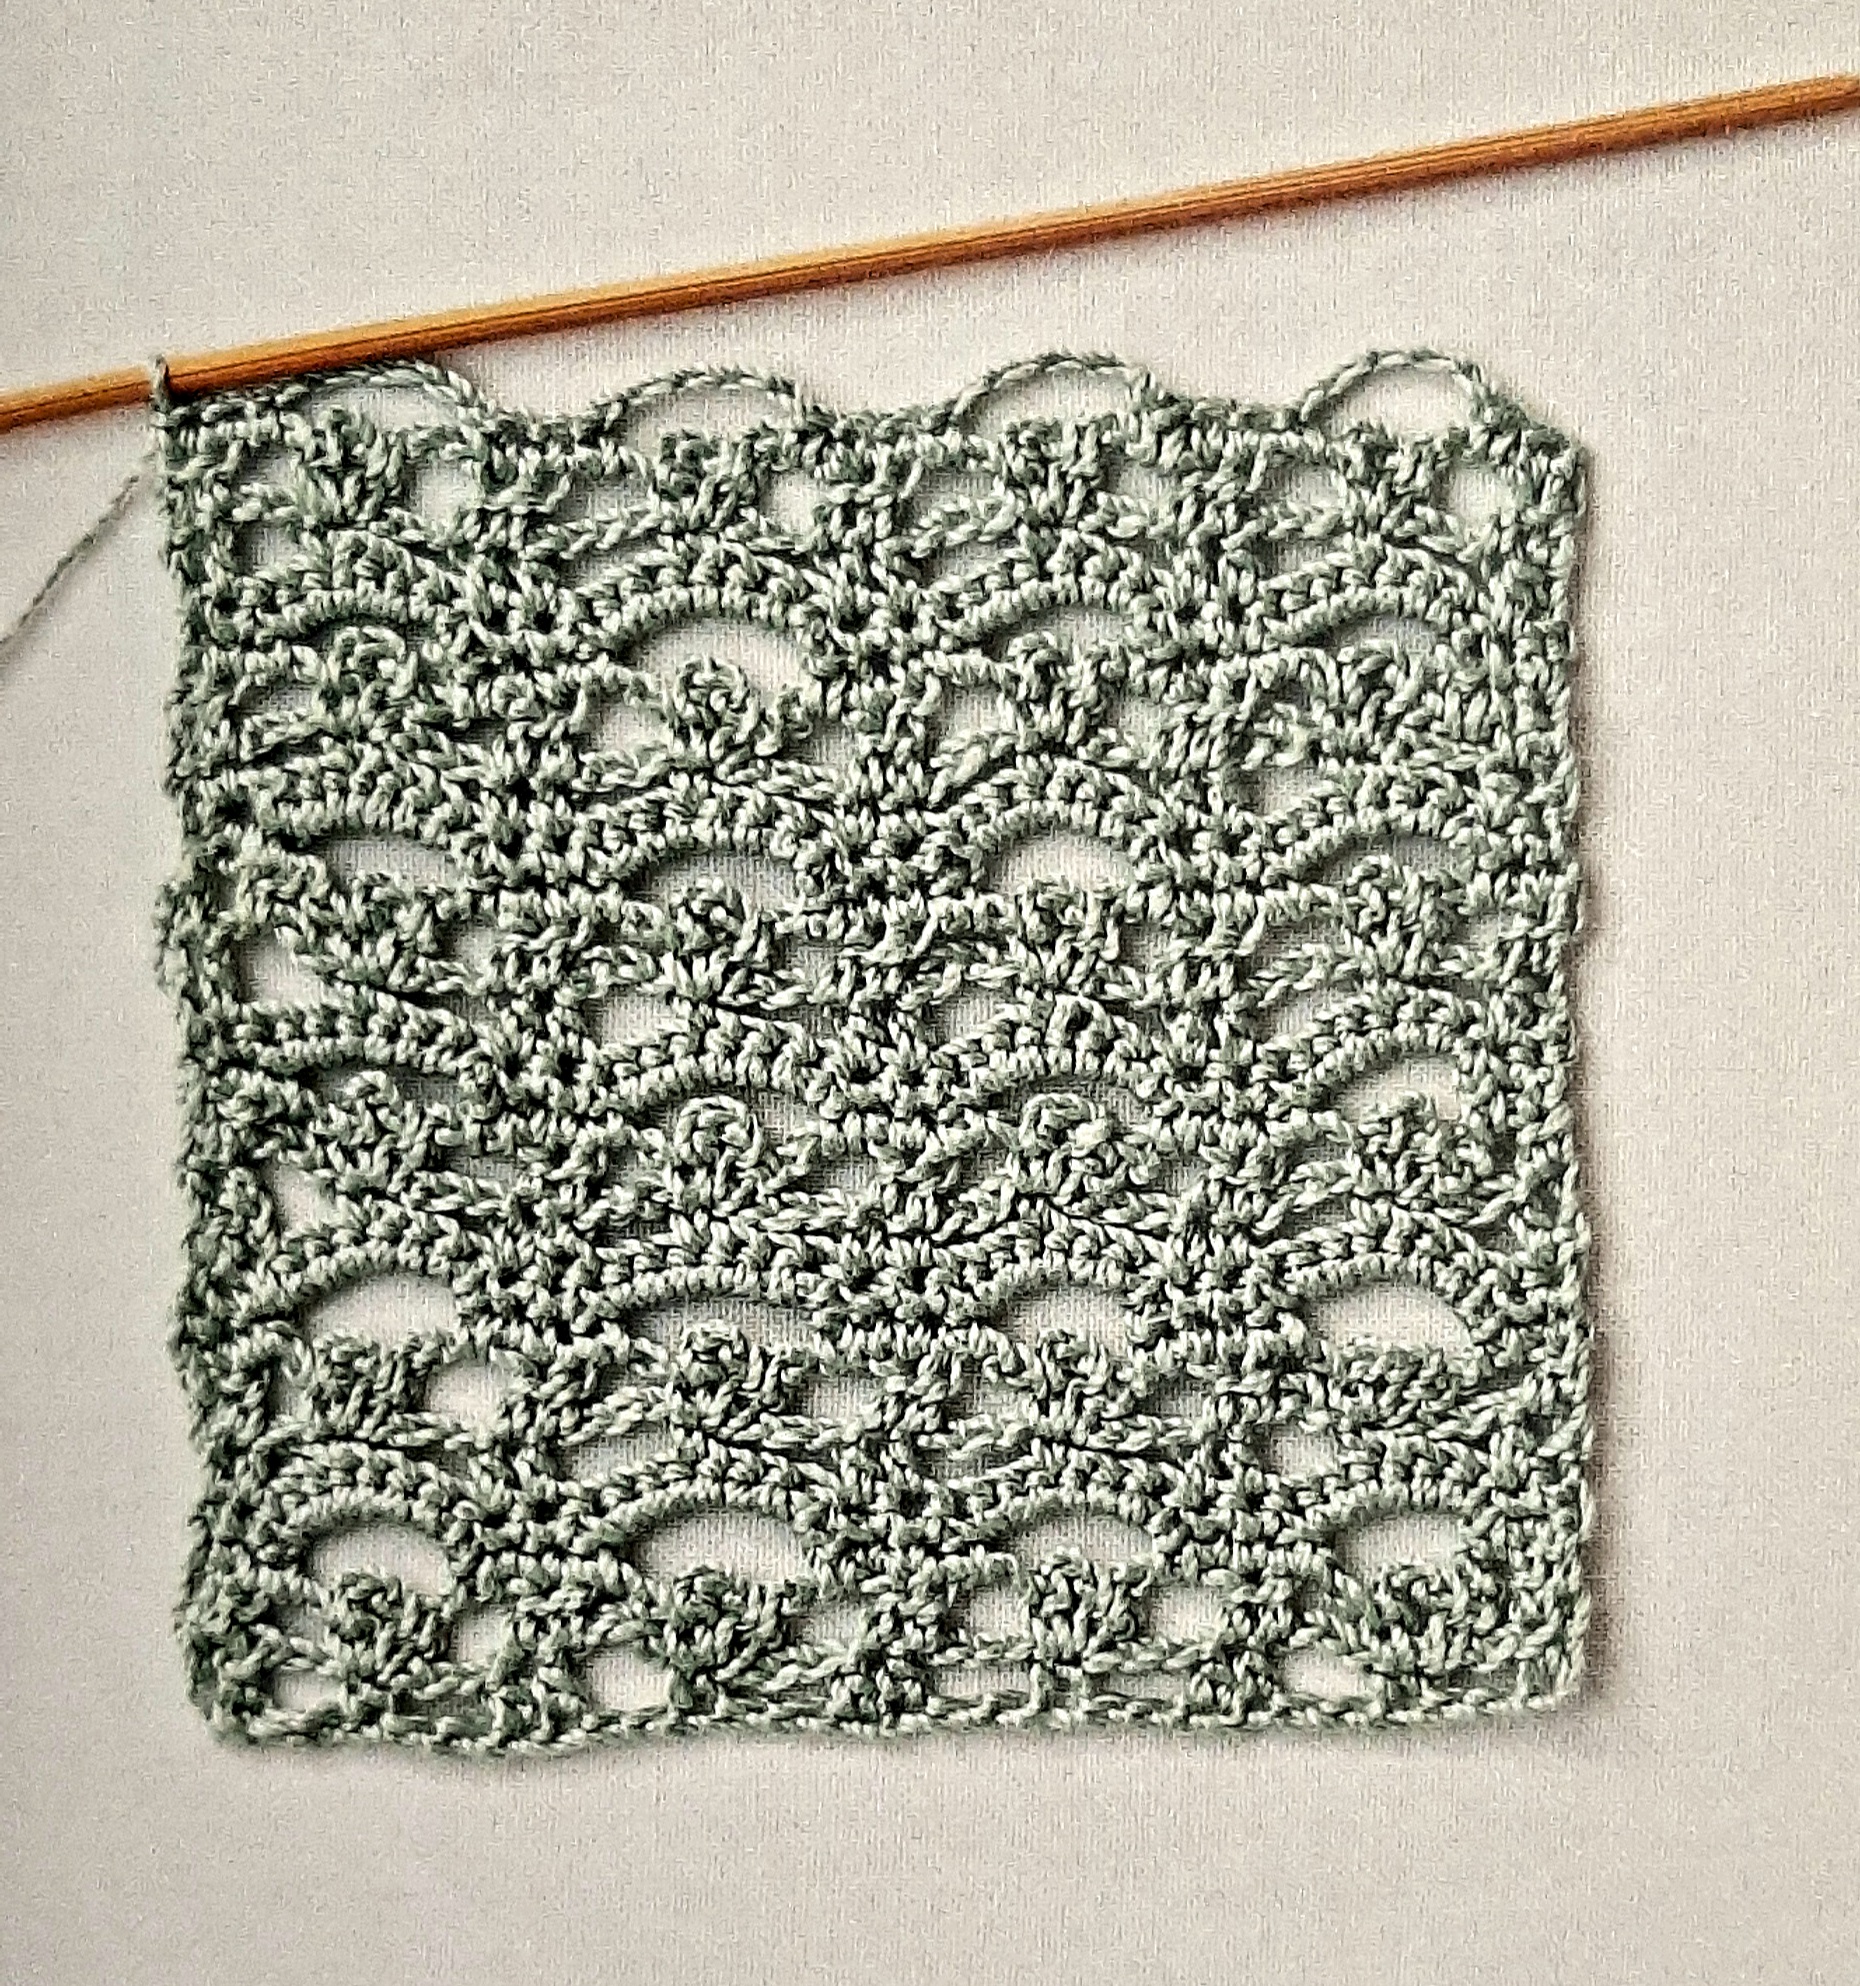 Point crochet arcs